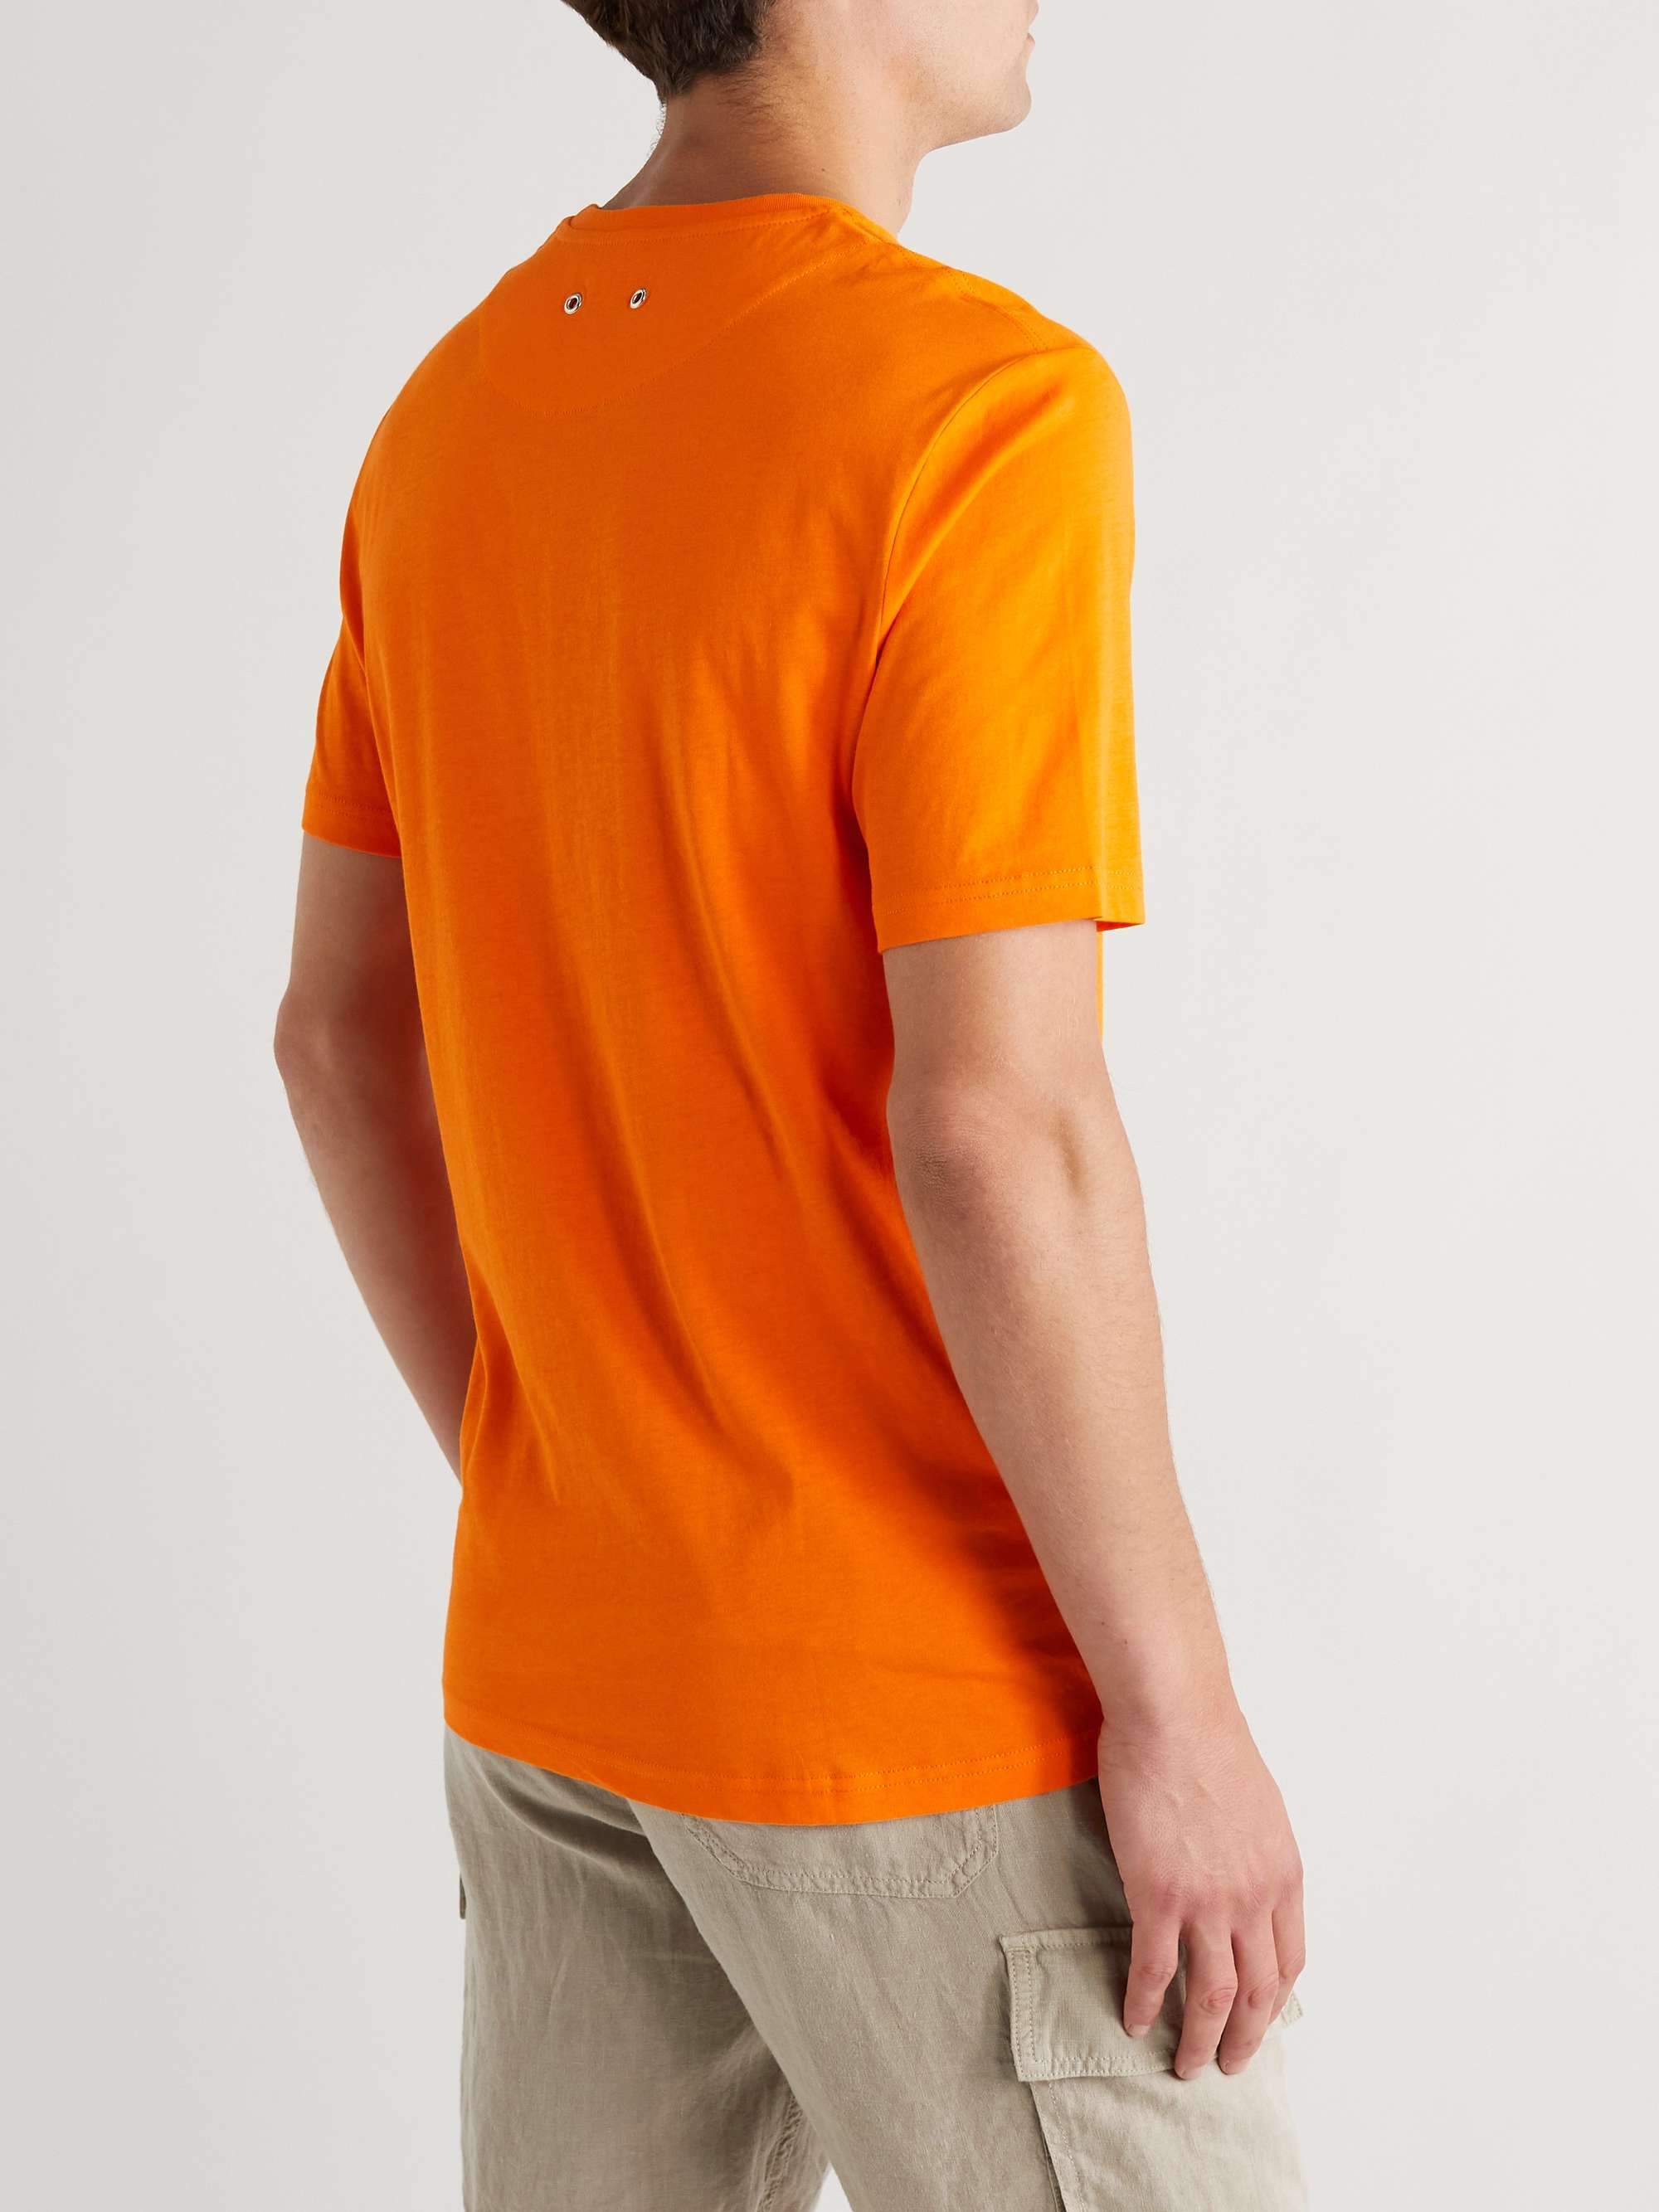 VILEBREQUIN Titus Organic Cotton-Jersey T-Shirt